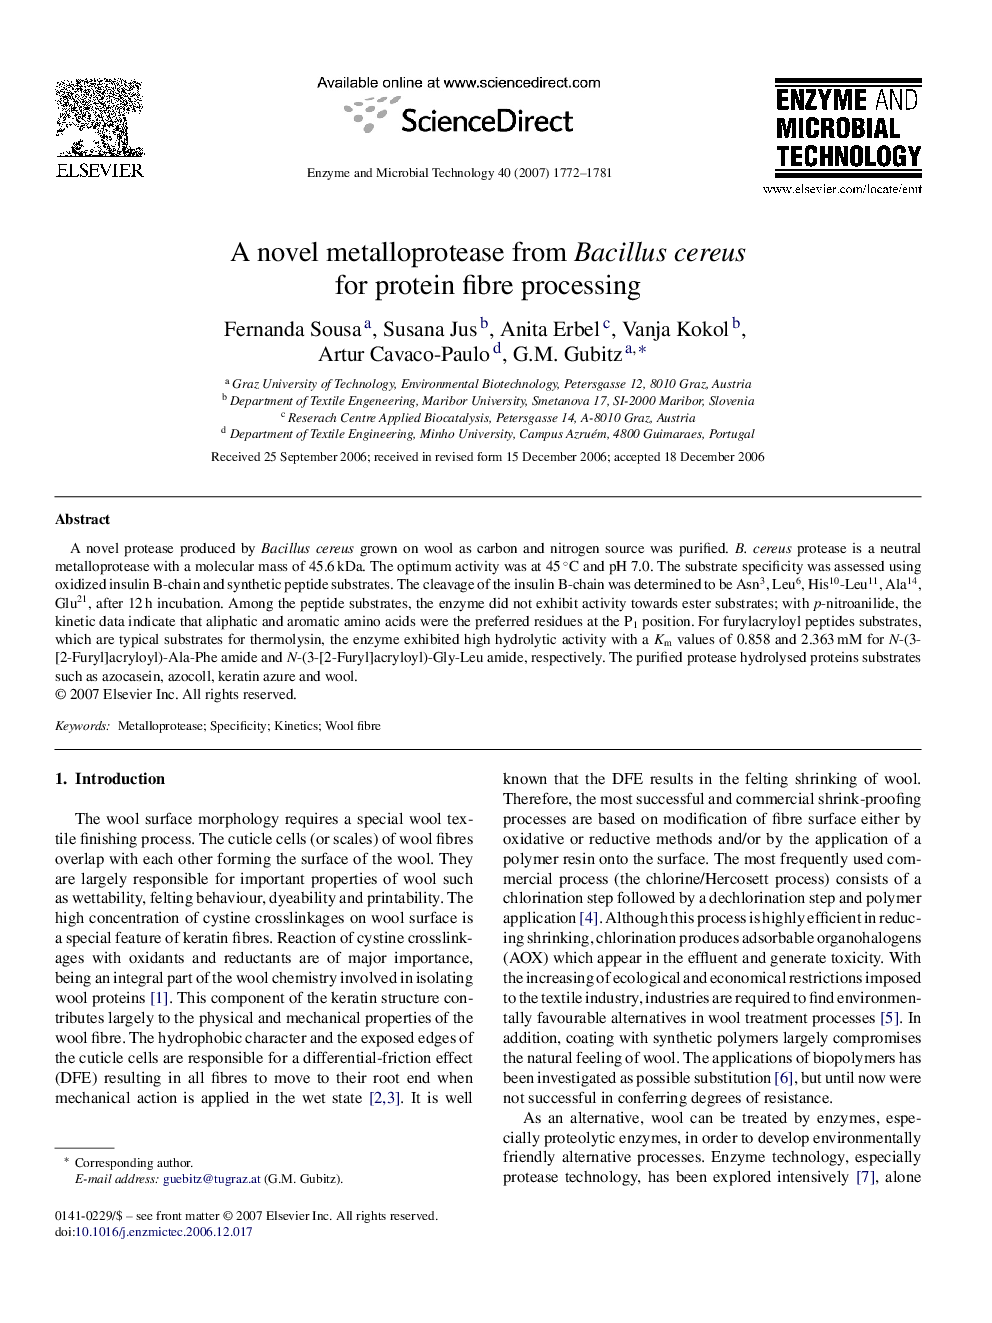 A novel metalloprotease from Bacillus cereus for protein fibre processing